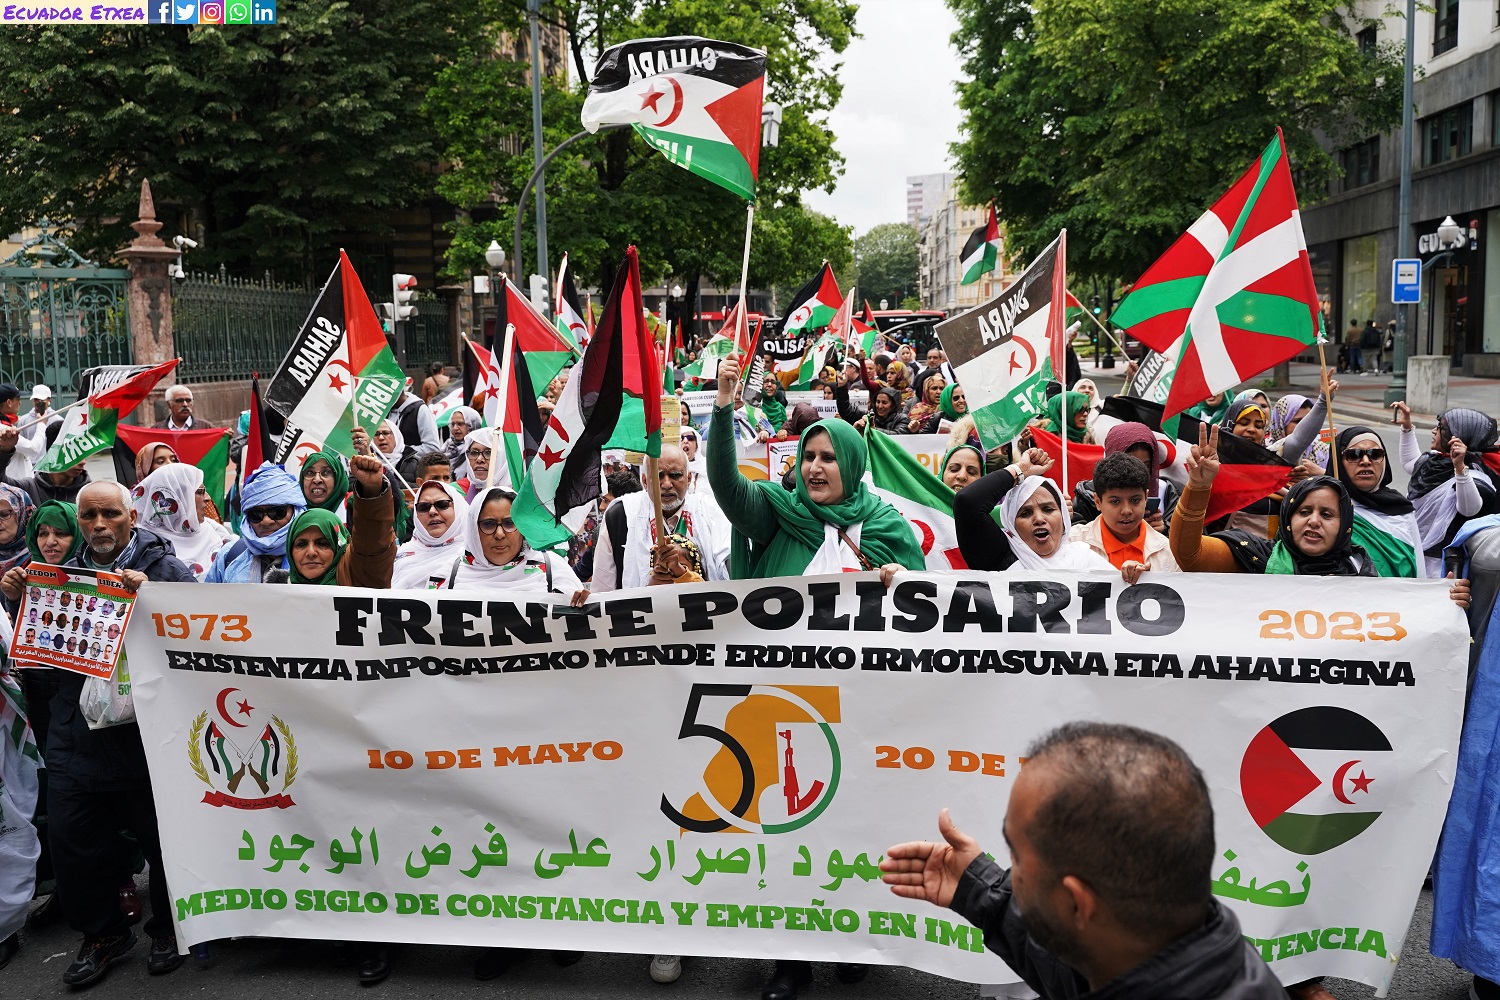 frente-polisario-50-aniversario-años-bilbao-españa-pedro-sánchez-ocupación-marruecos-sahara